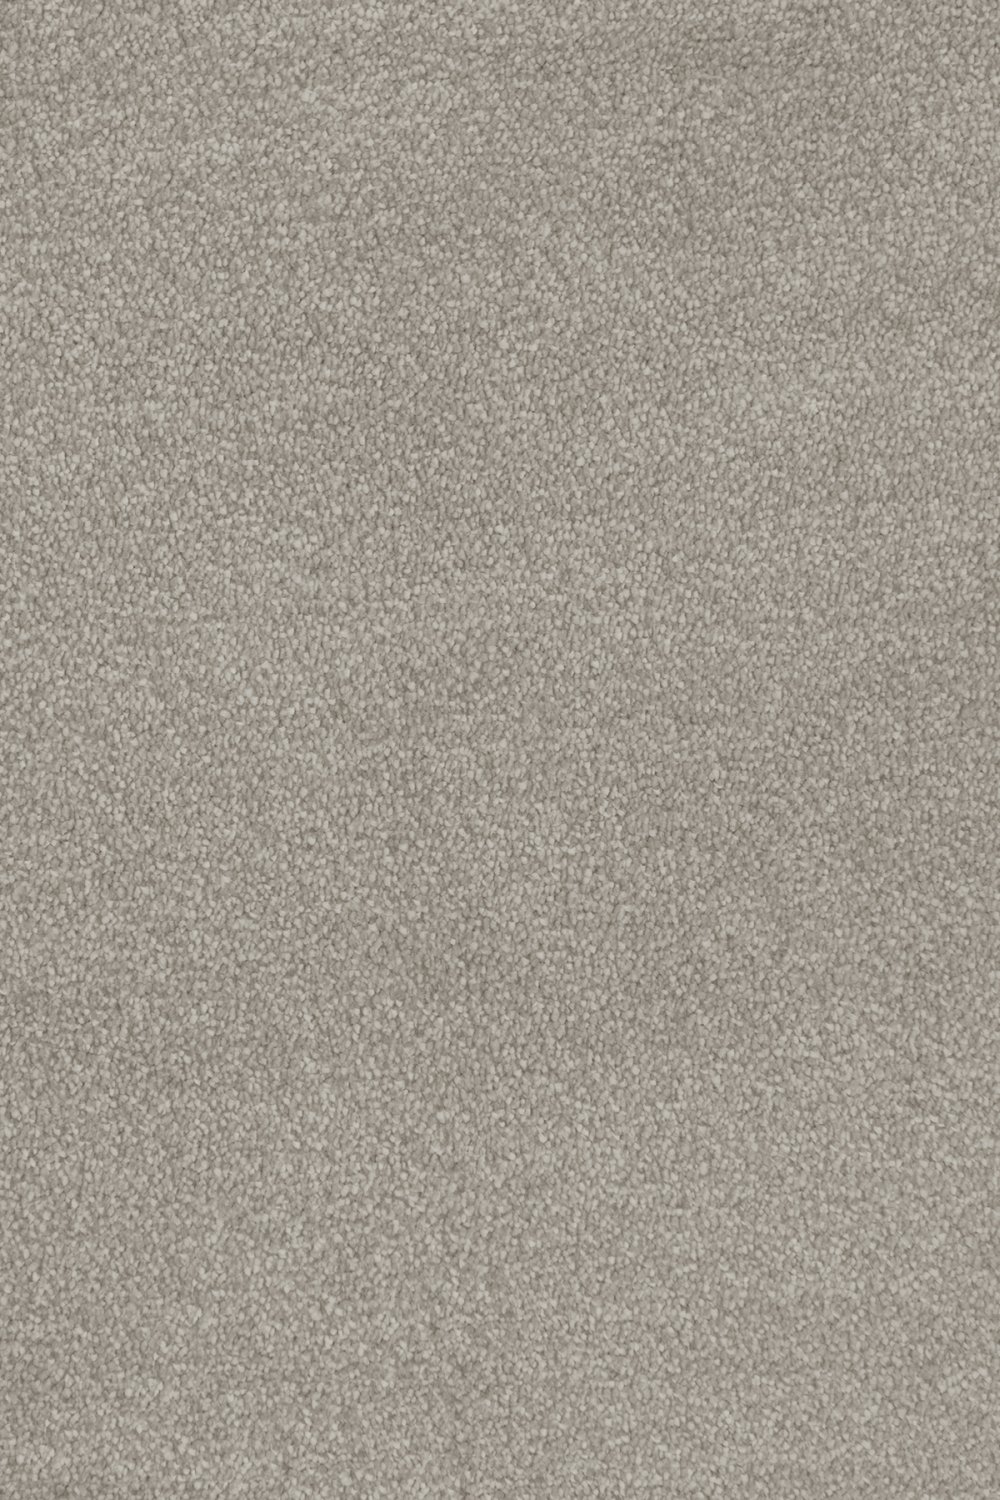 Septimus Twist Carpet - Soft Silver 92